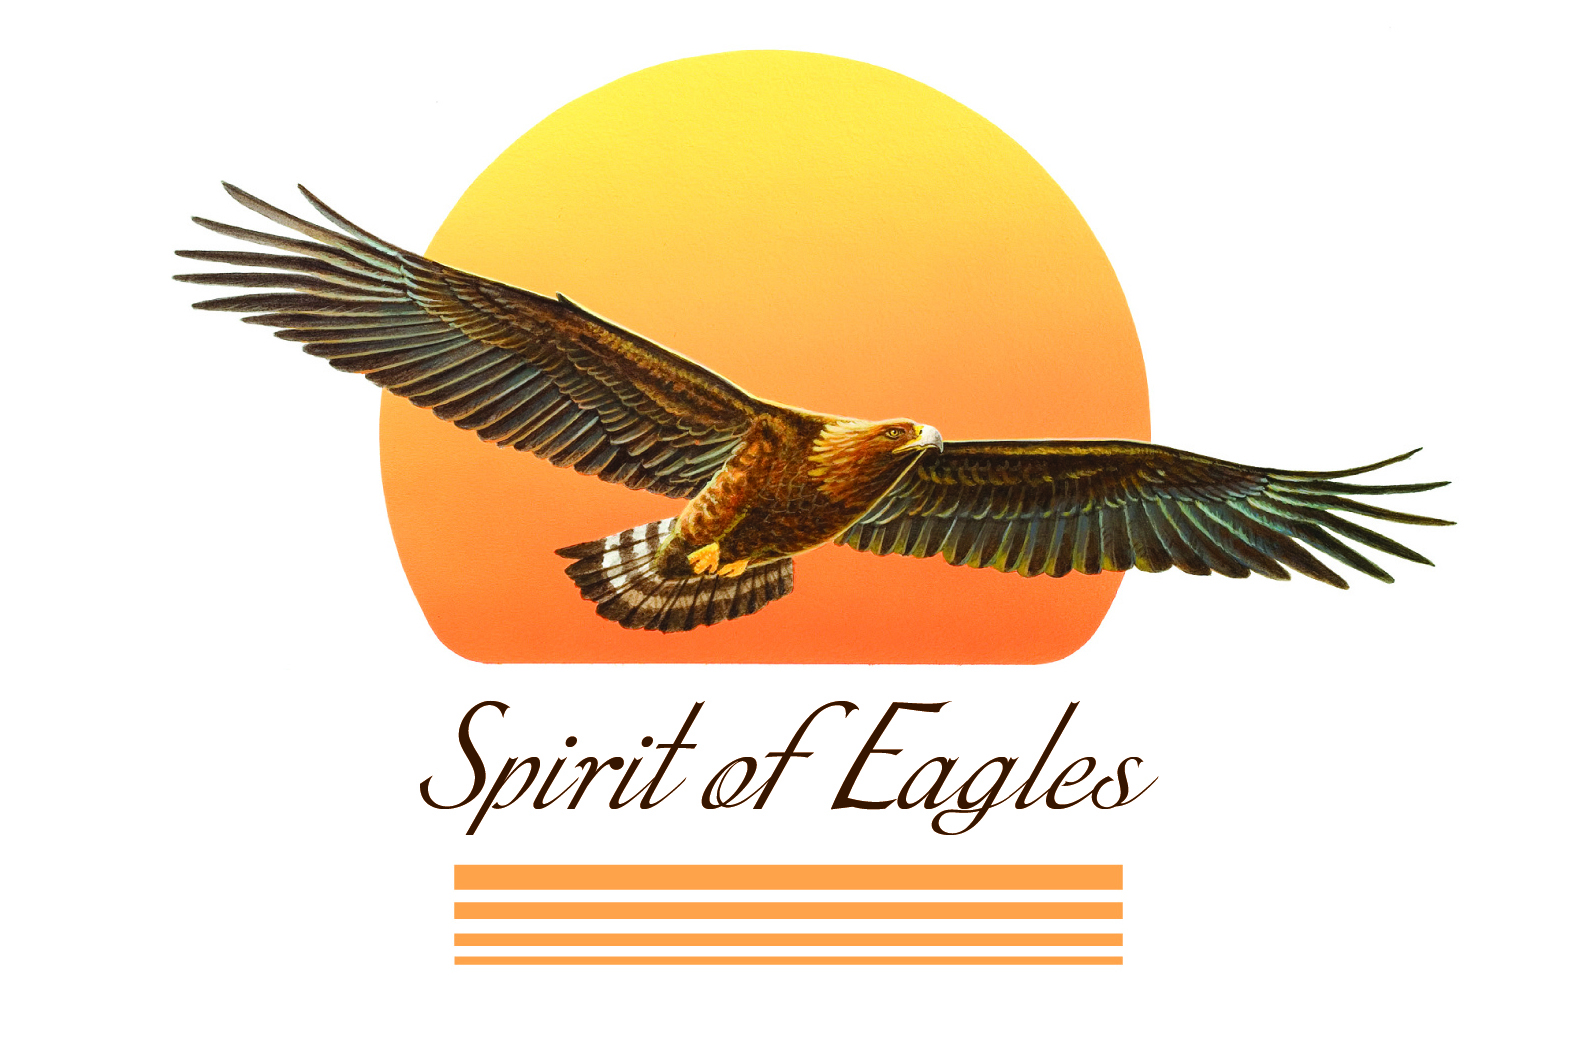 Spirit of Eagles